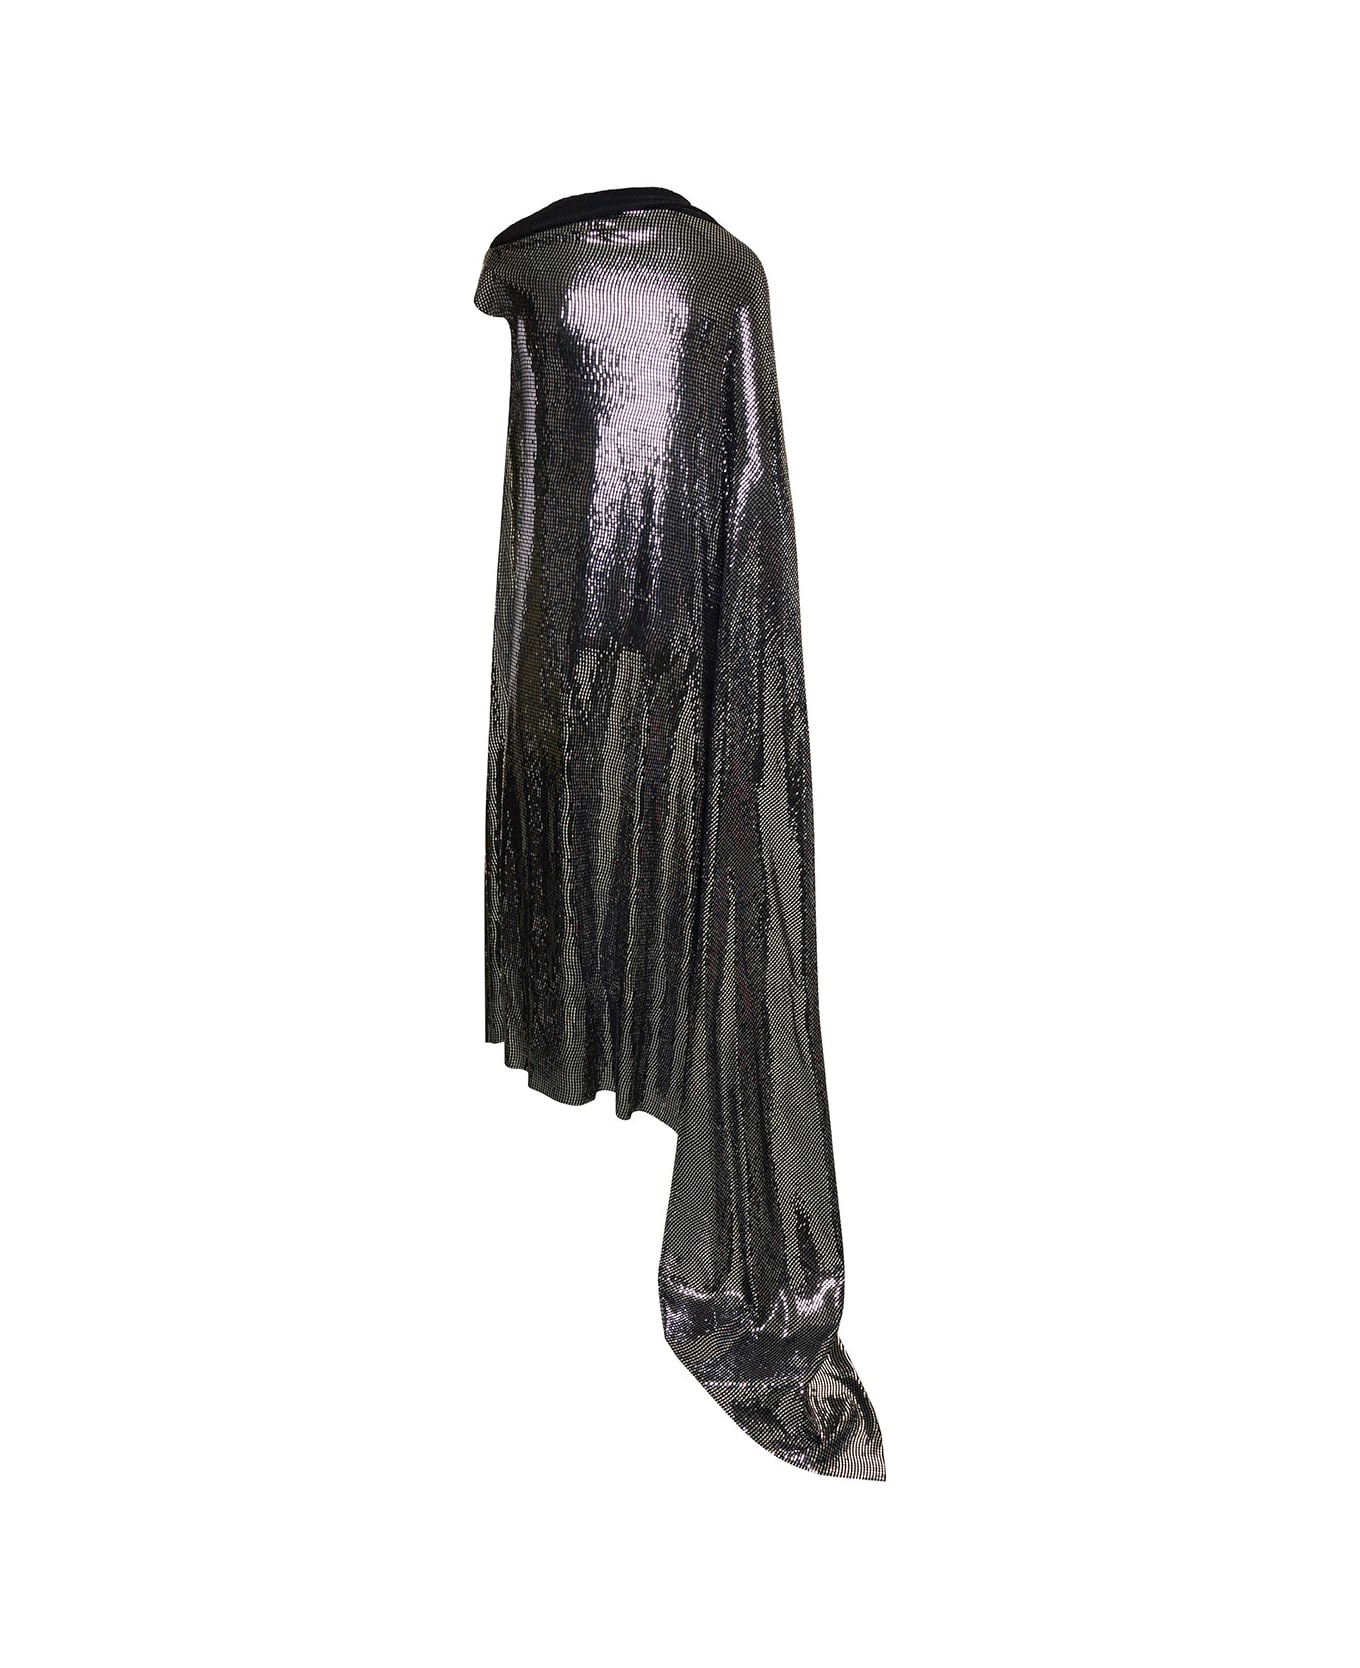 Balenciaga Minimal Gown Metallic Transfert Jersey - Metallic